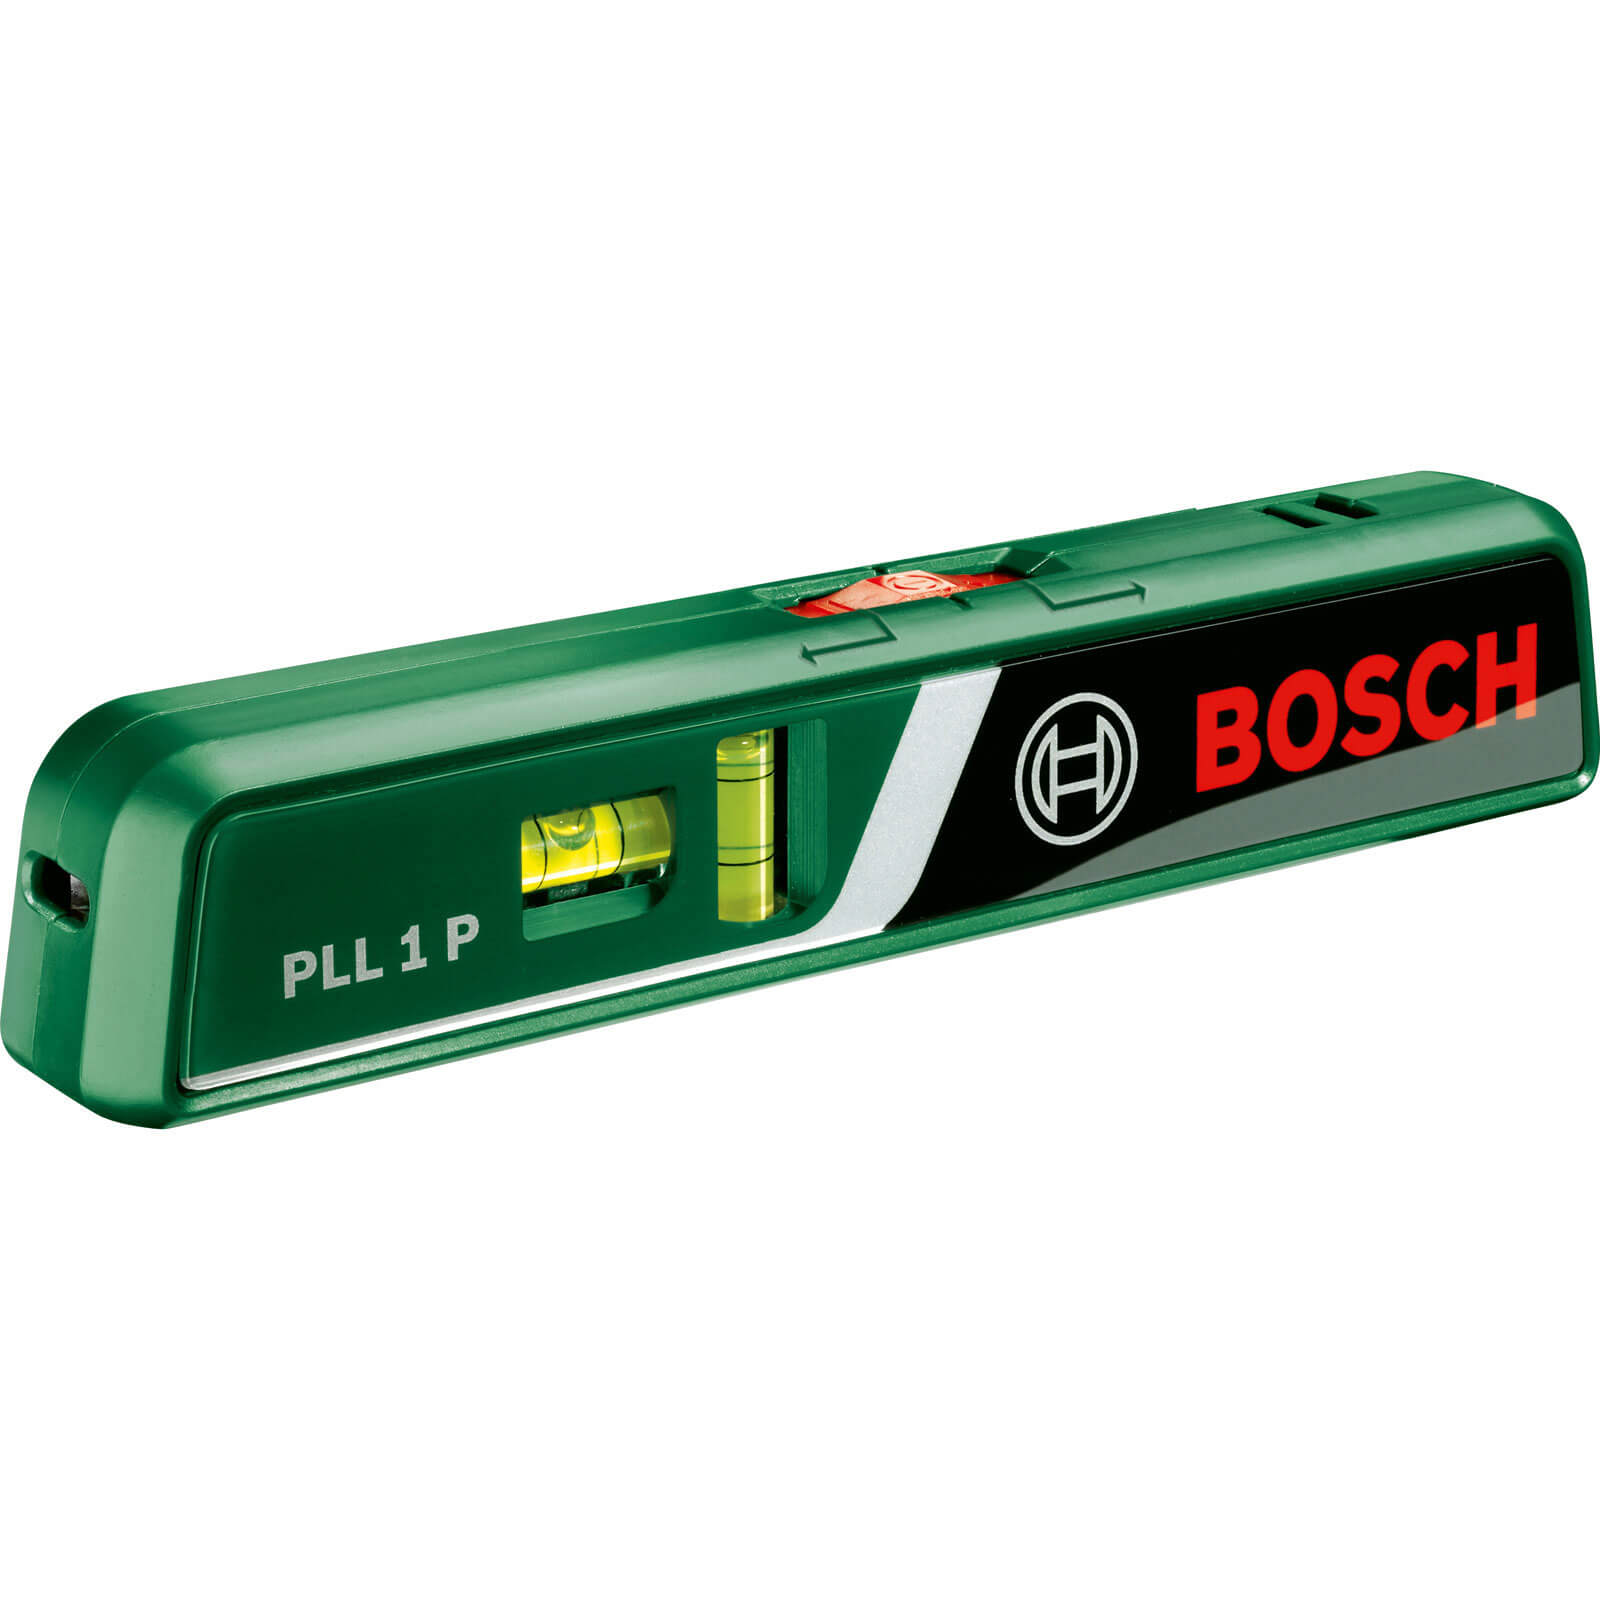 Image of Bosch PLL 1 P Pocket Spirit Level and Laser Line Level